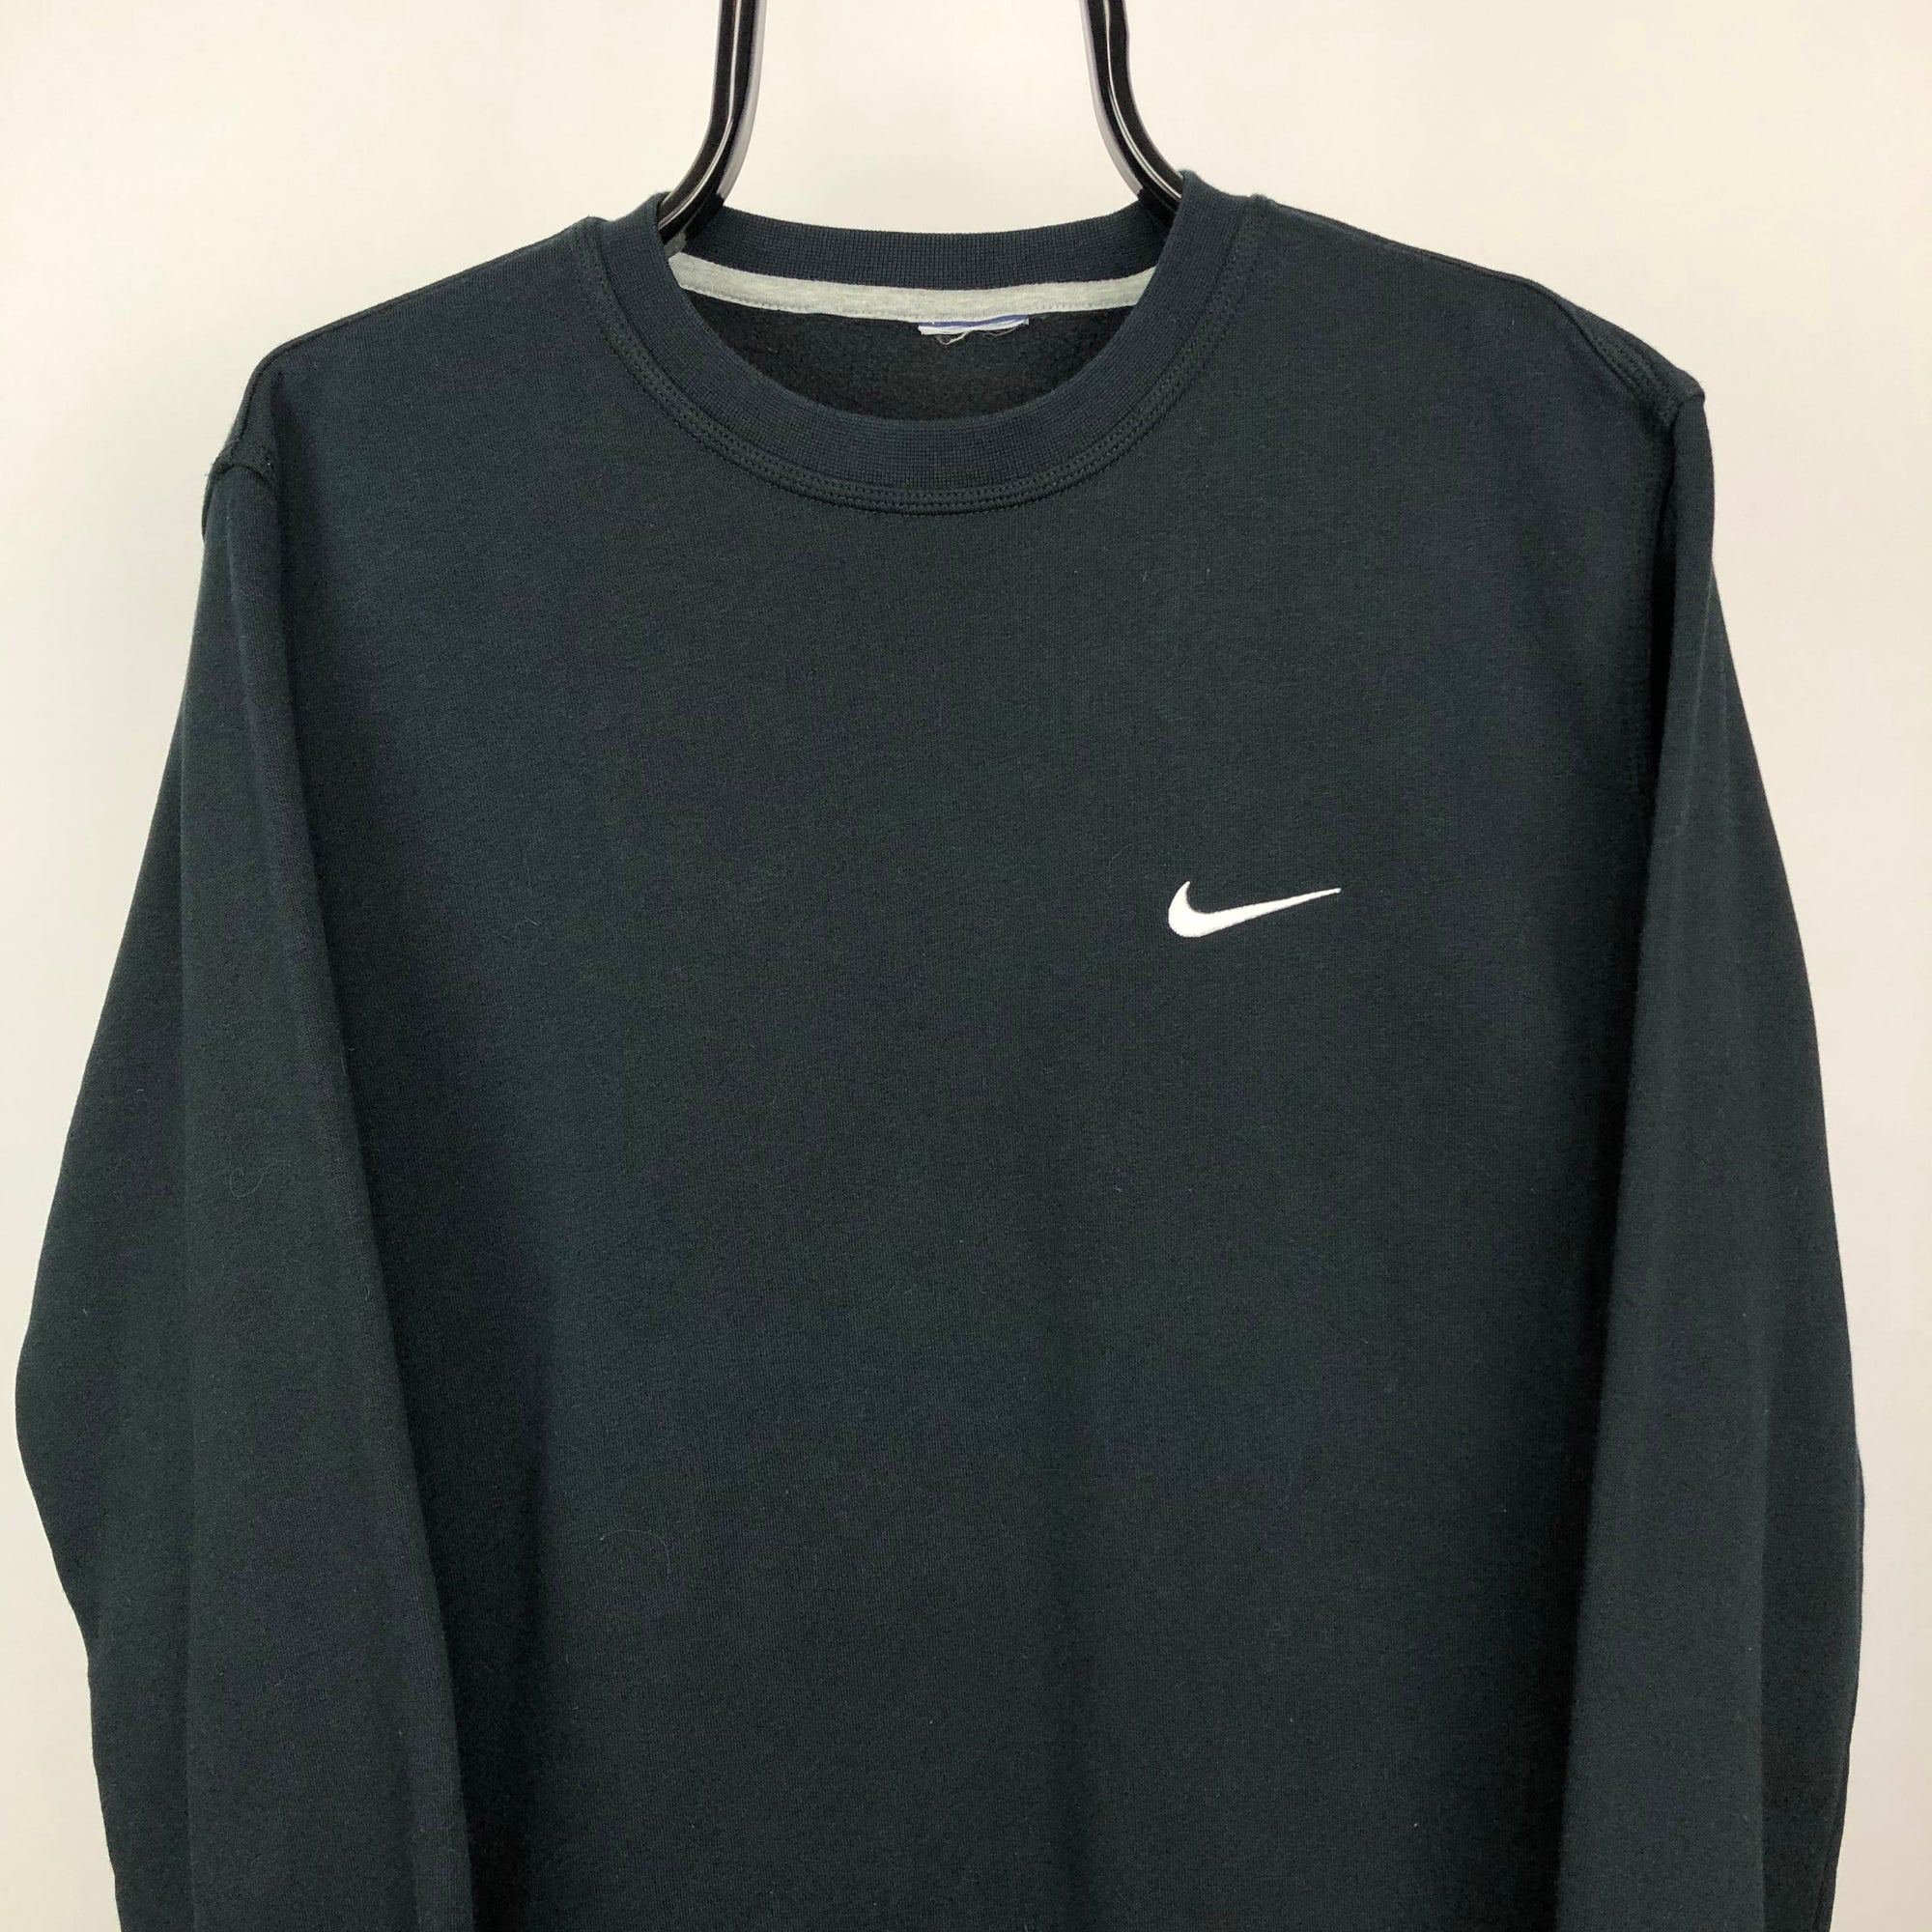 Vintage Nike Embroidered Small Logo Sweatshirt in Black - Men's Large/Women's XL